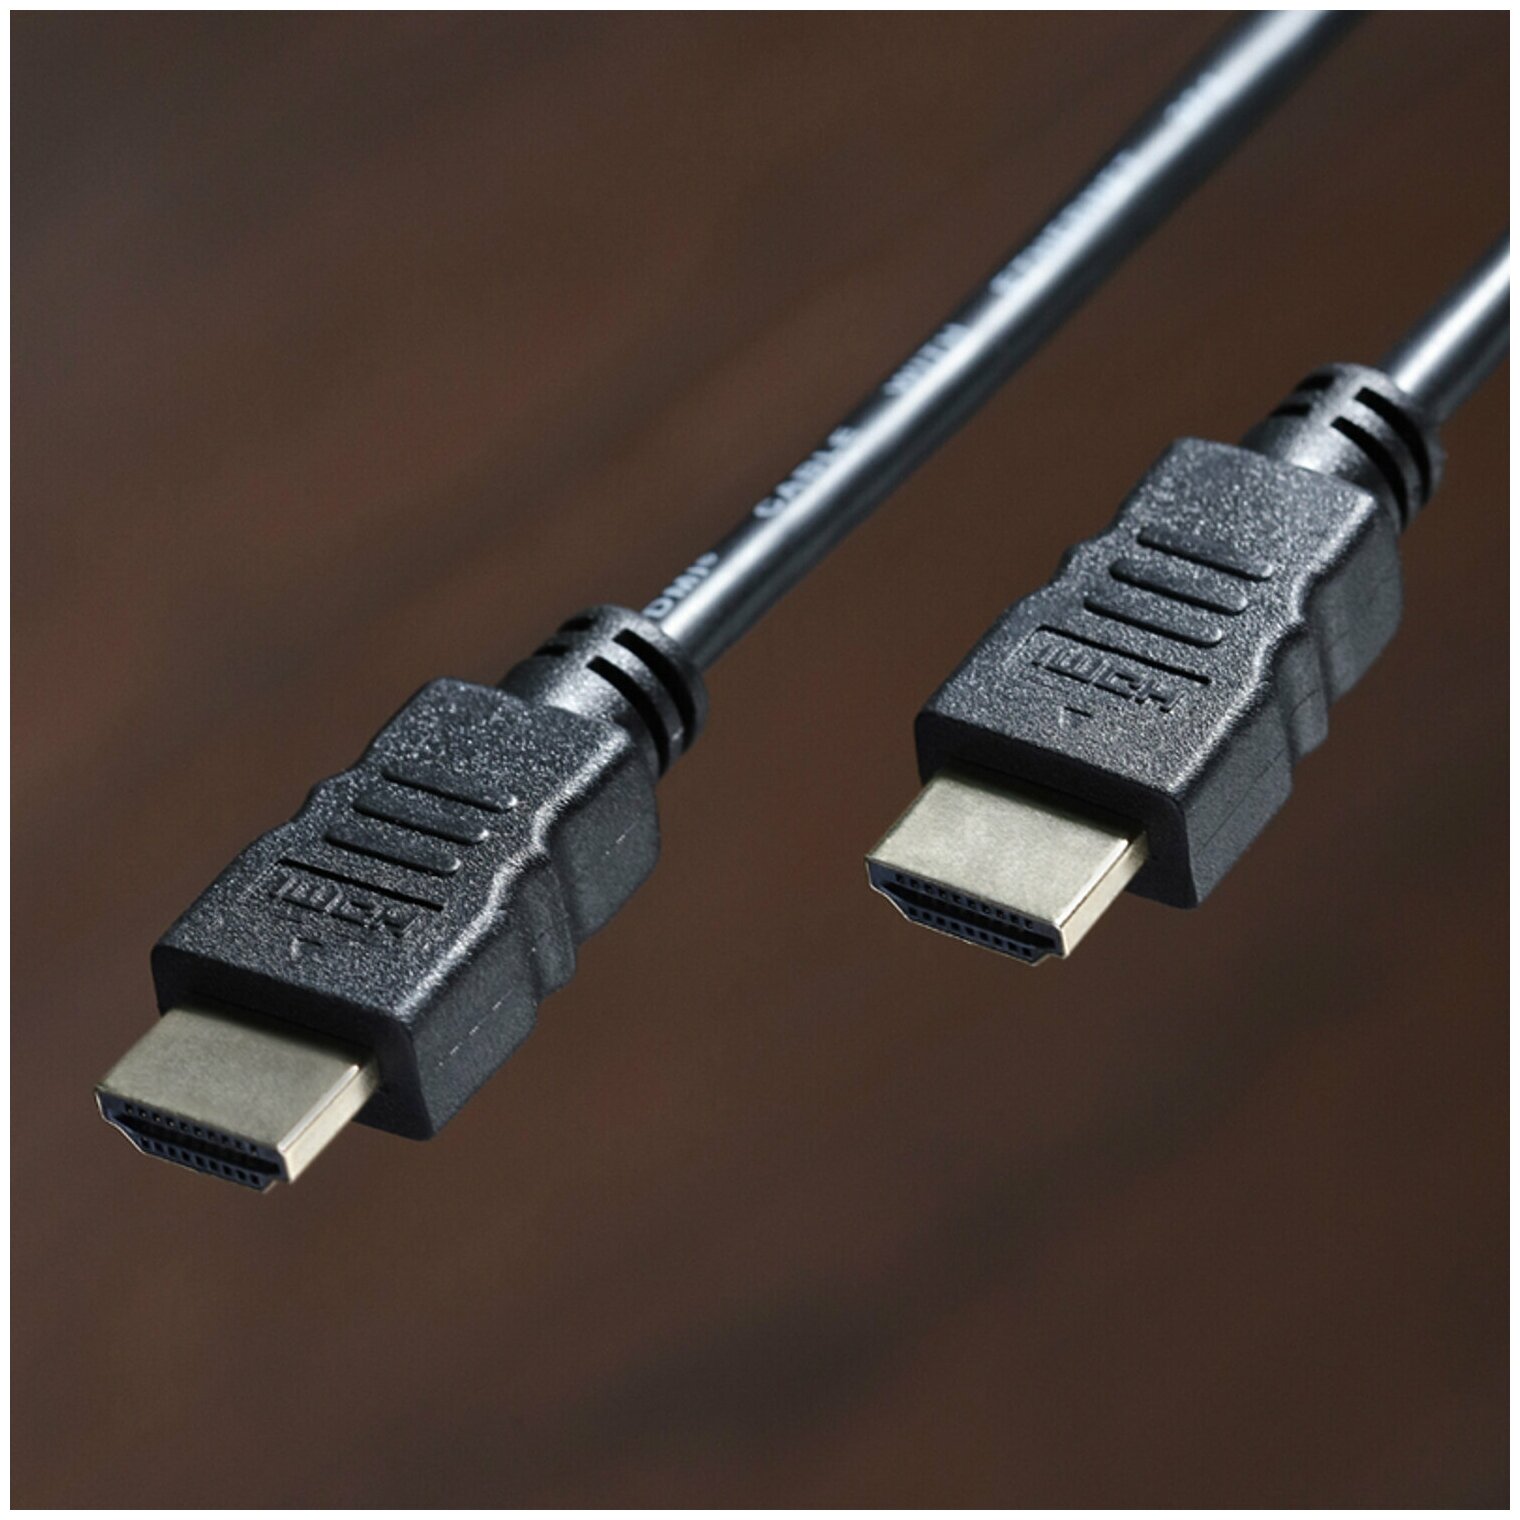 Кабель шнур провод HDMI - HDMI 1.4 4К/3D PROconnect, 1 метр